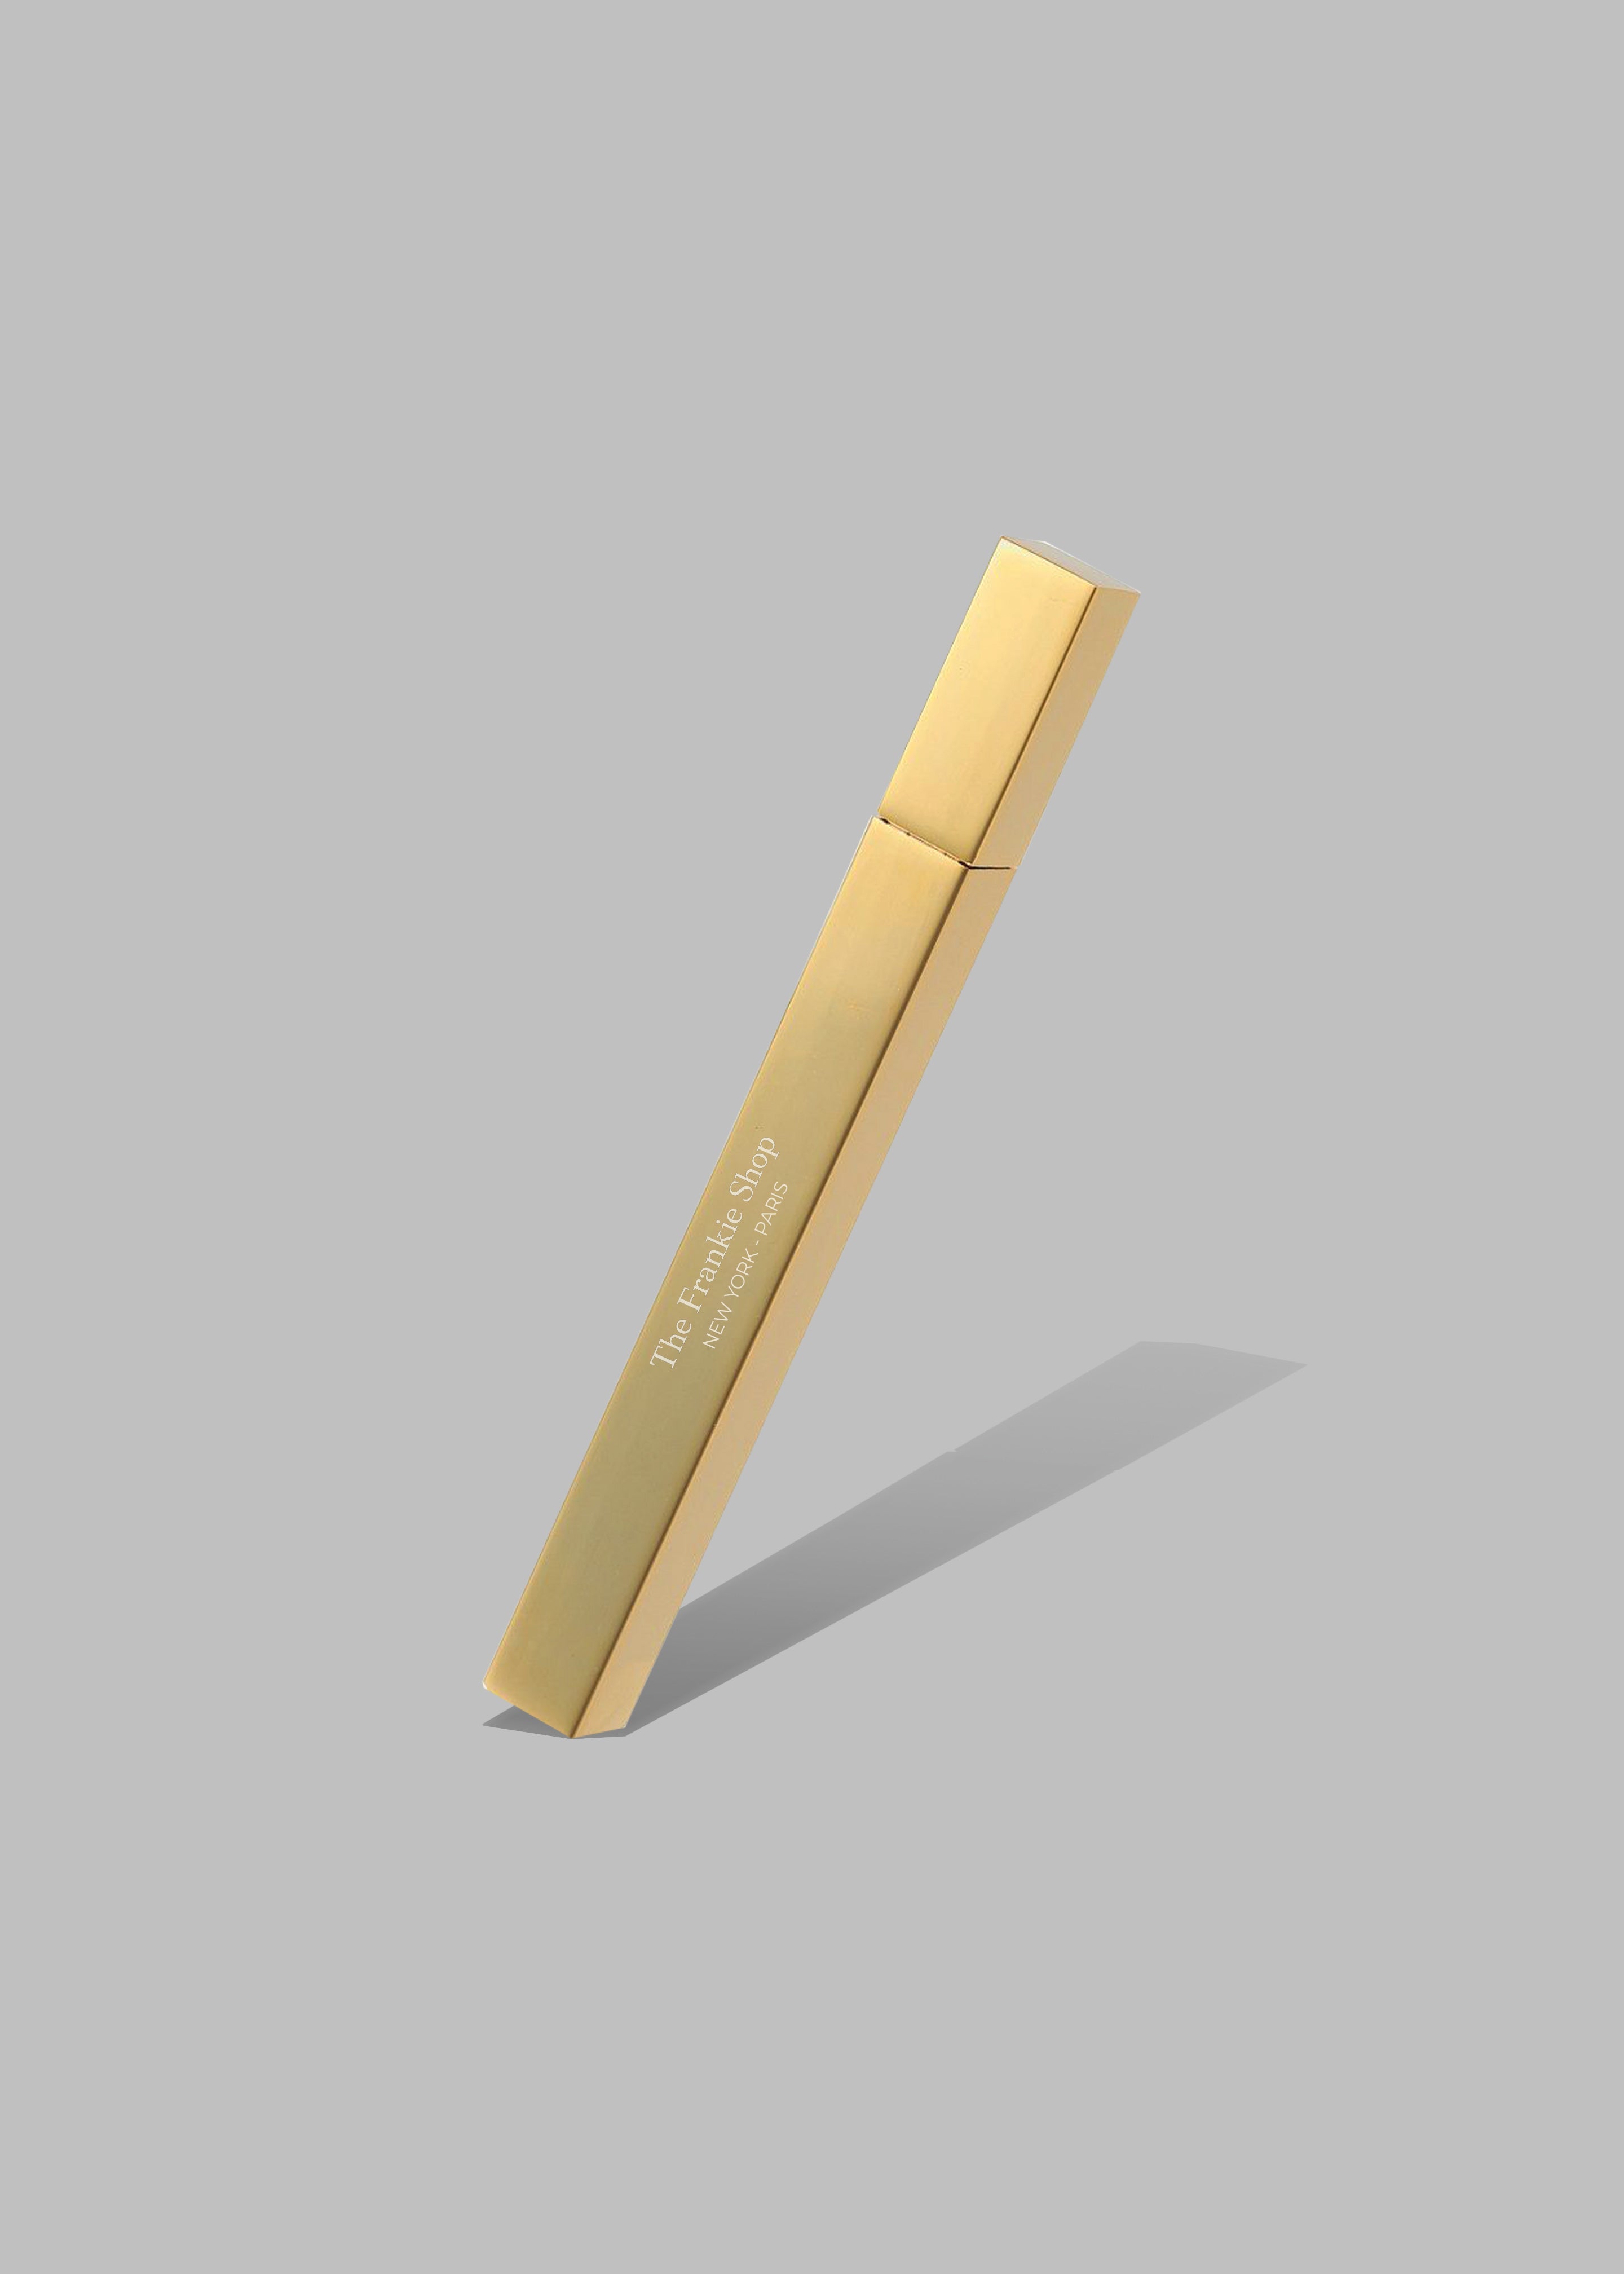 TFS Lighter - Gold - 1